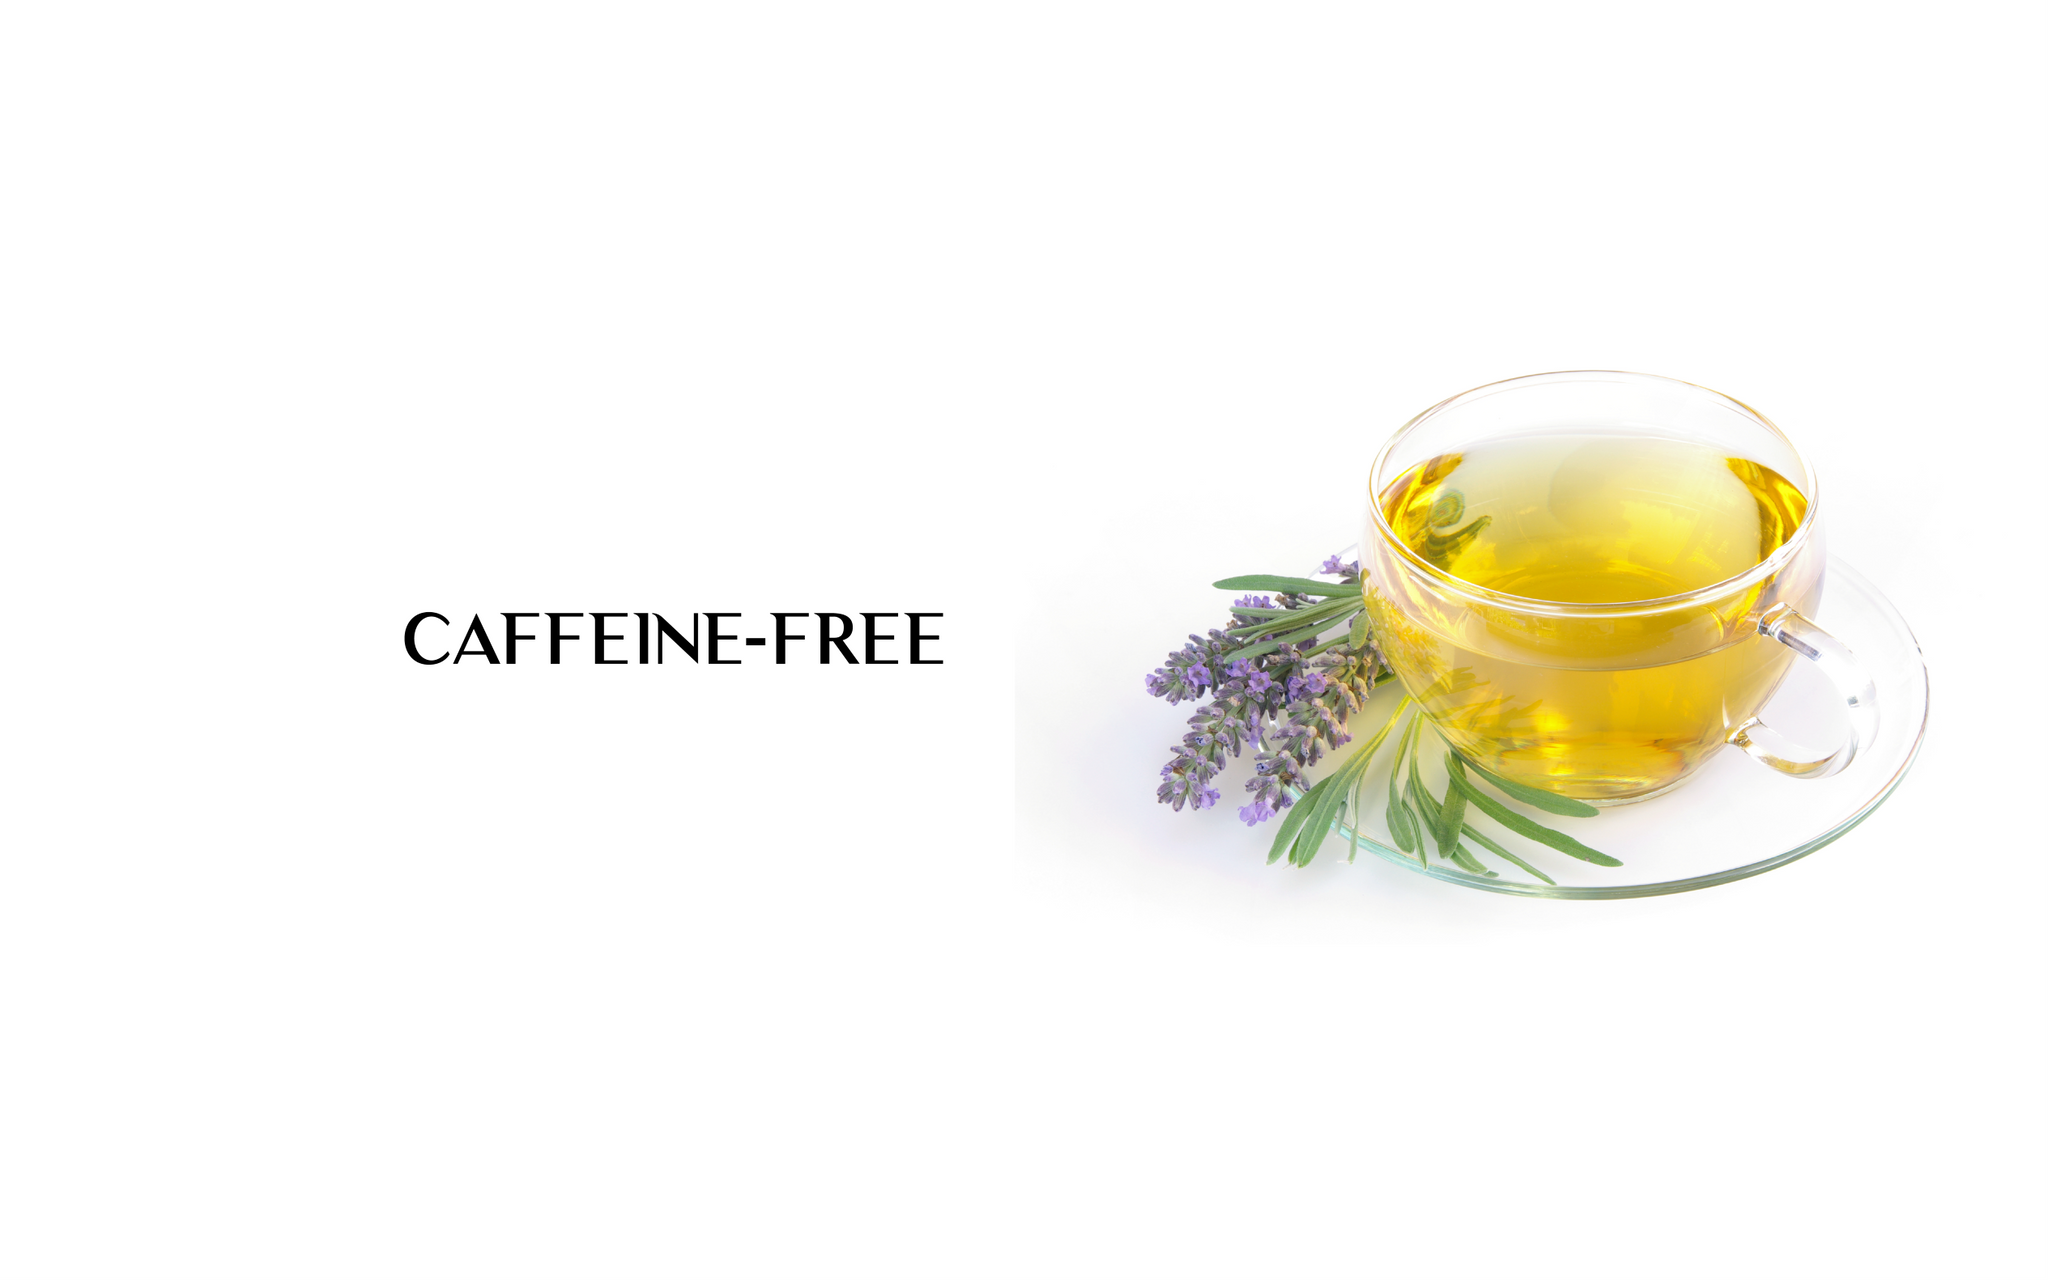 Caffeine-Free Teas